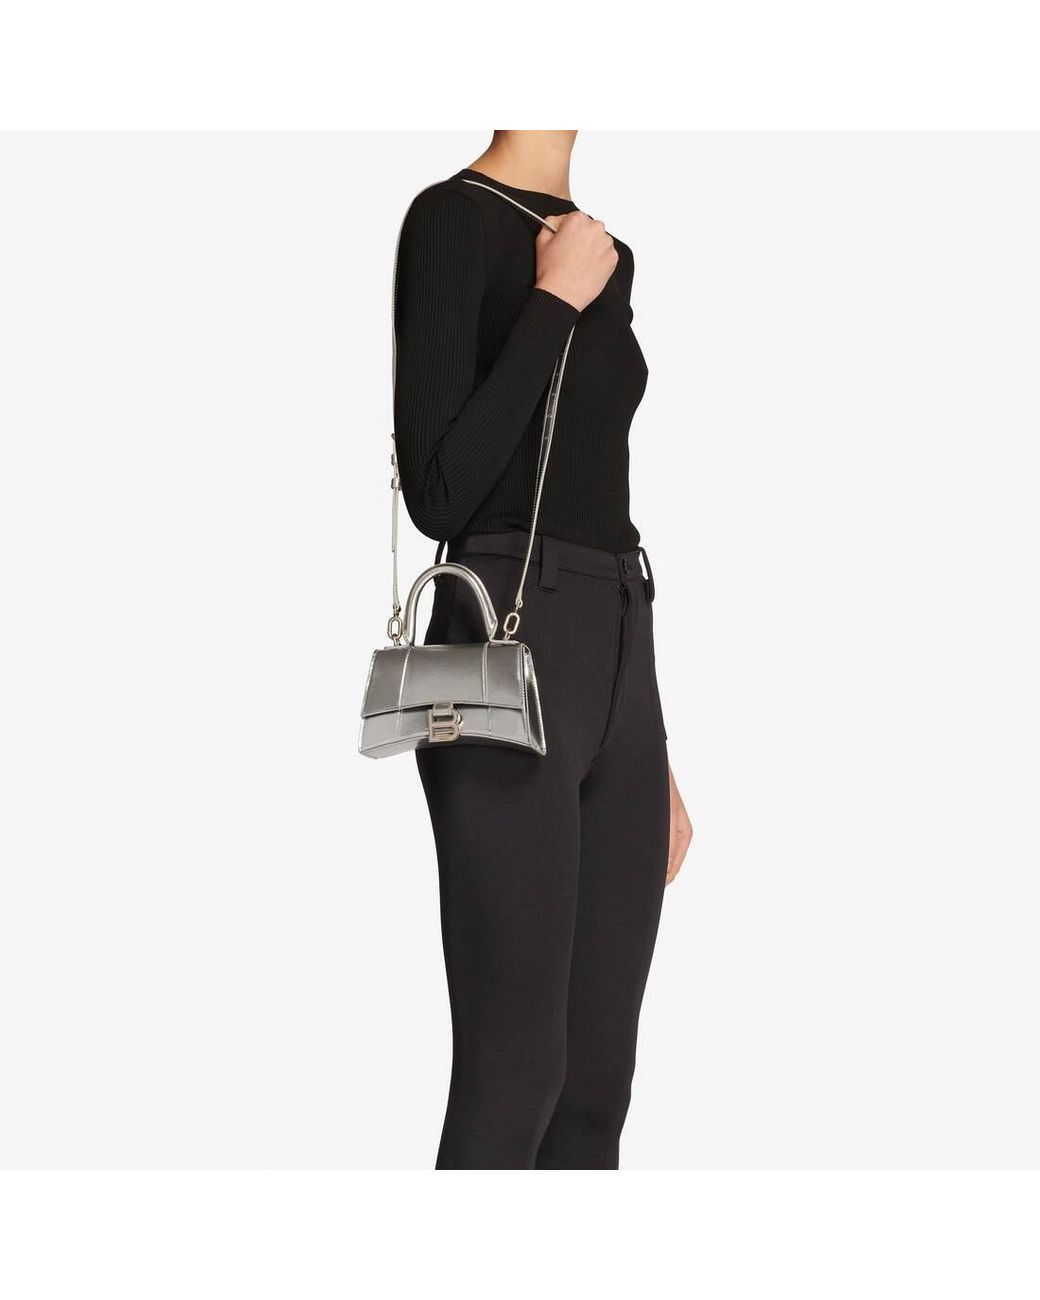 Balenciaga Xs Hourglass Top Handle Bag in Metallic Silver